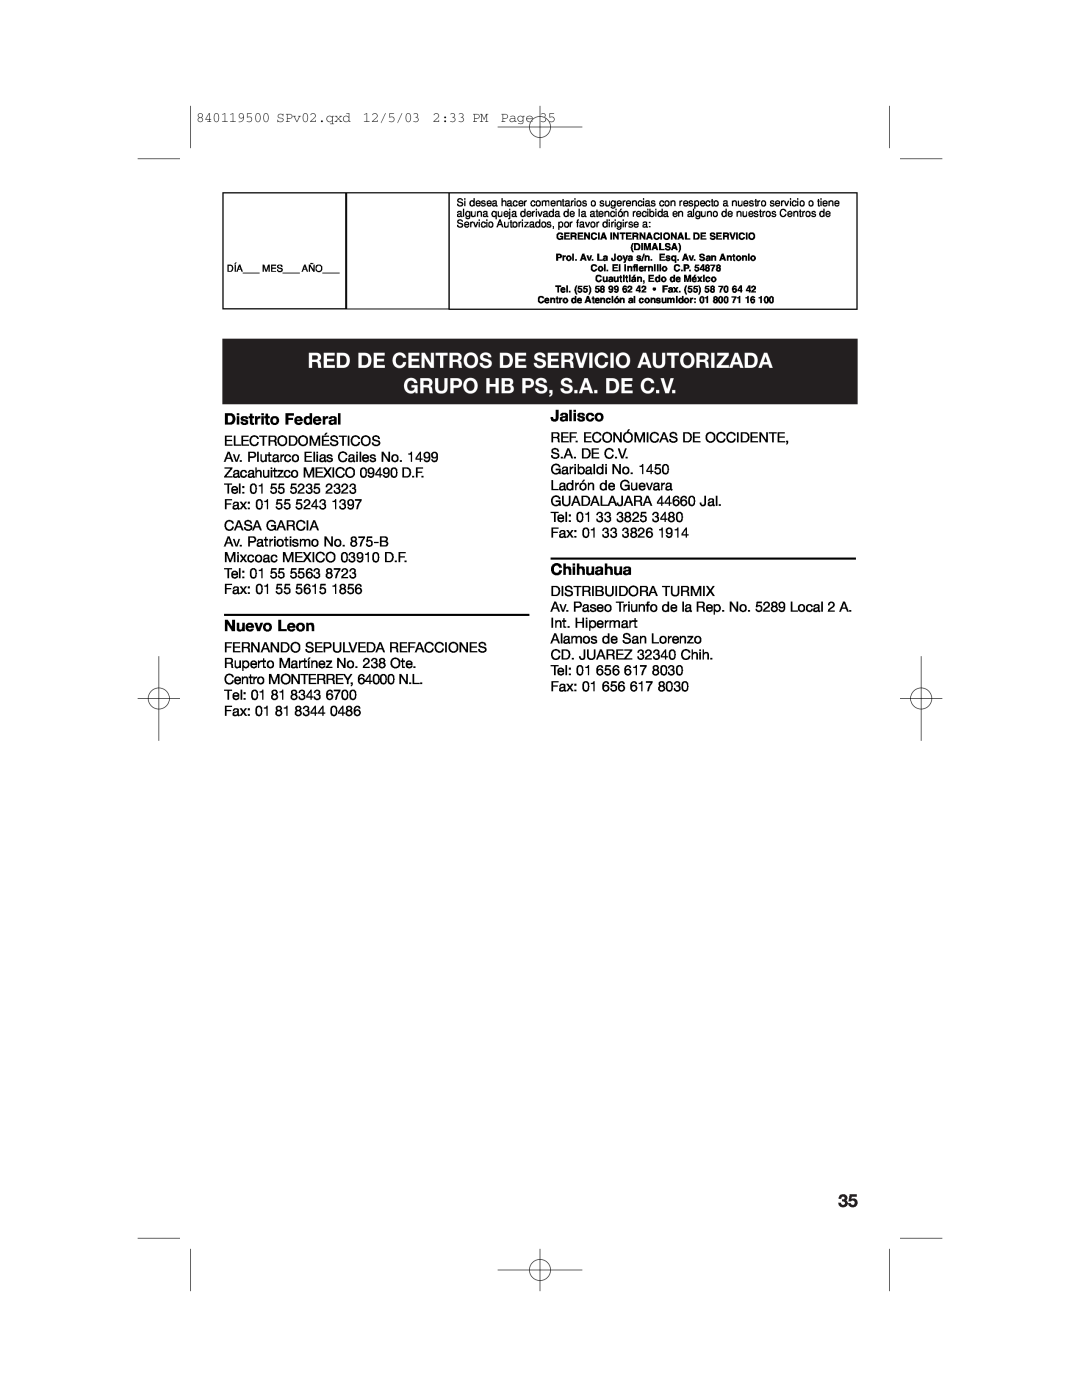 Hamilton Beach 31195 manual Red De Centros De Servicio Autorizada, Grupo Hb Ps, S.A. De C.V, Distrito Federal, Nuevo Leon 